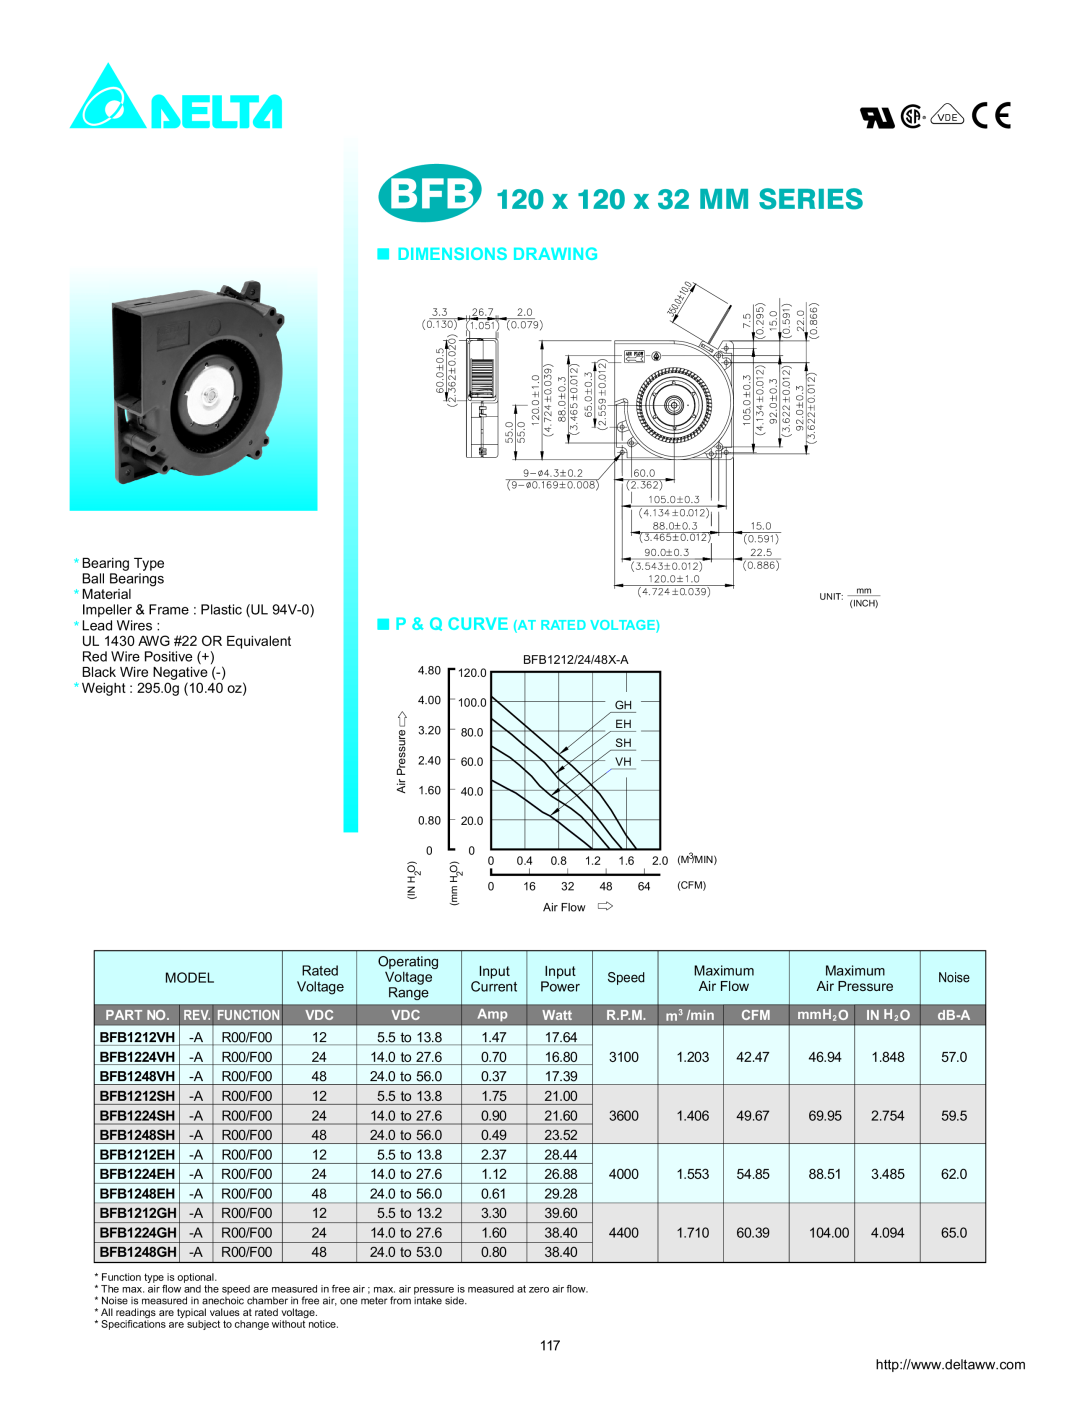 Delta Electronics BFB1224L, BFB1224M Watt, R.P.M, IN H 2 O, BFB 120 x 120 x 32 MM SERIES, Dimensions Drawing, mmH 2 O 